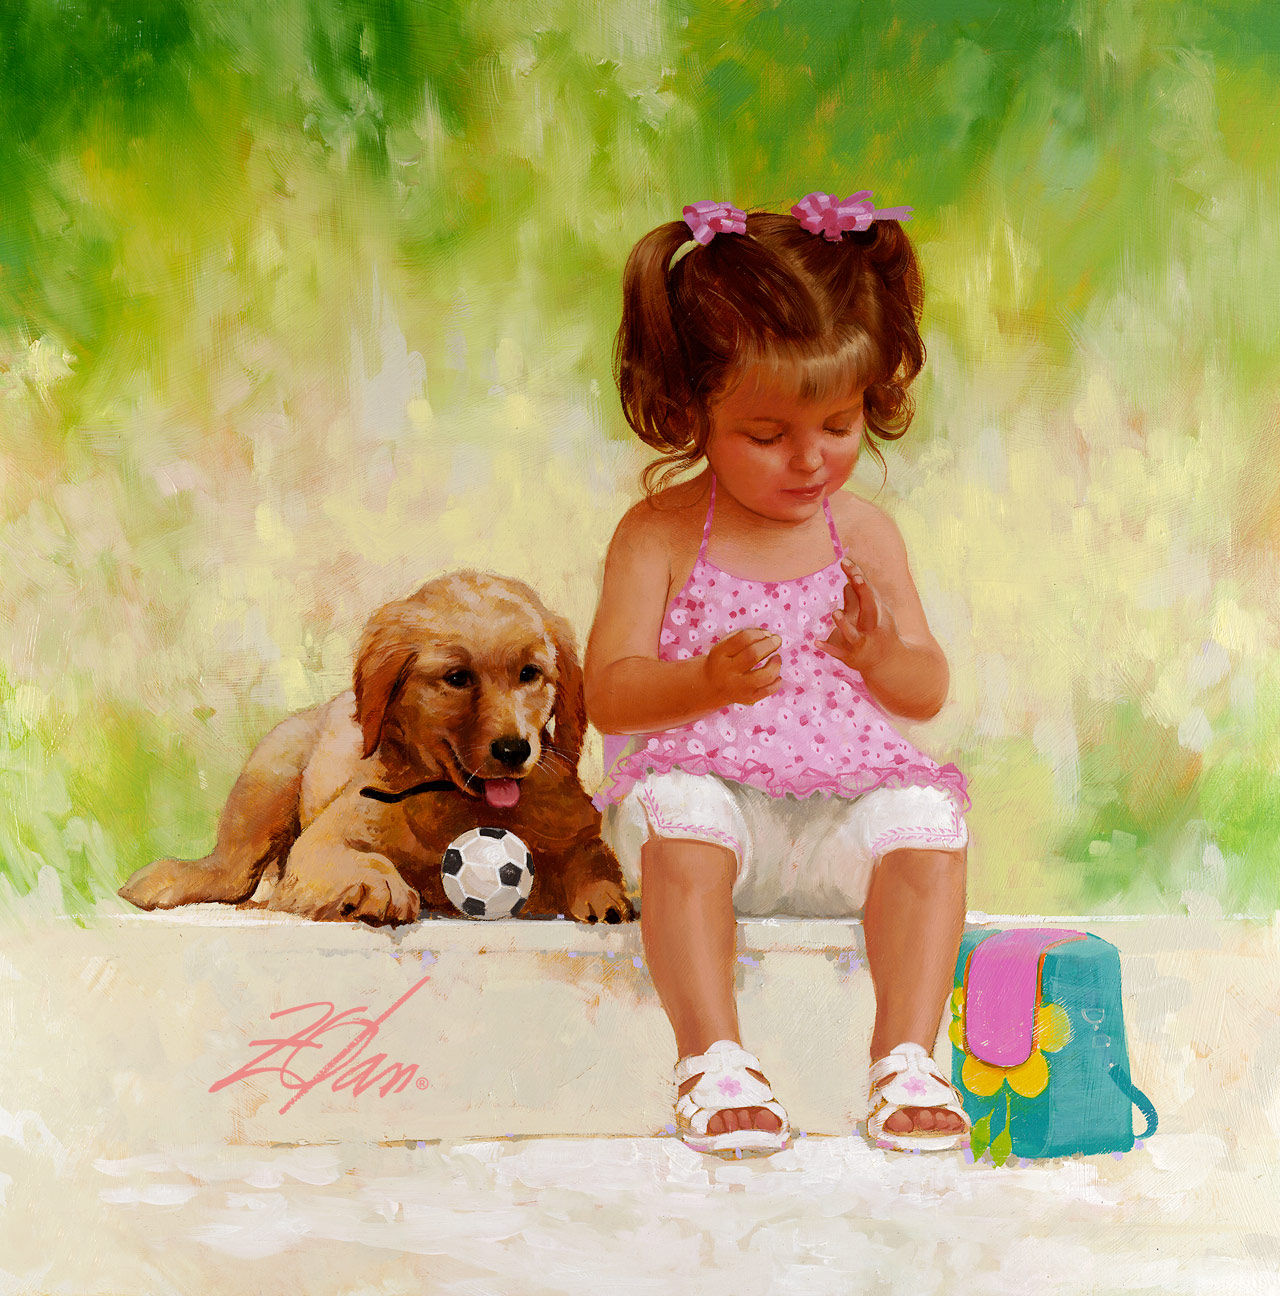 https://zolanagency.com/wp-content/uploads/2018/03/donald-zolan-childrens-artist-art-brand-animals-kids-puppies-zolan-licensing-agency_summer-days.jpg